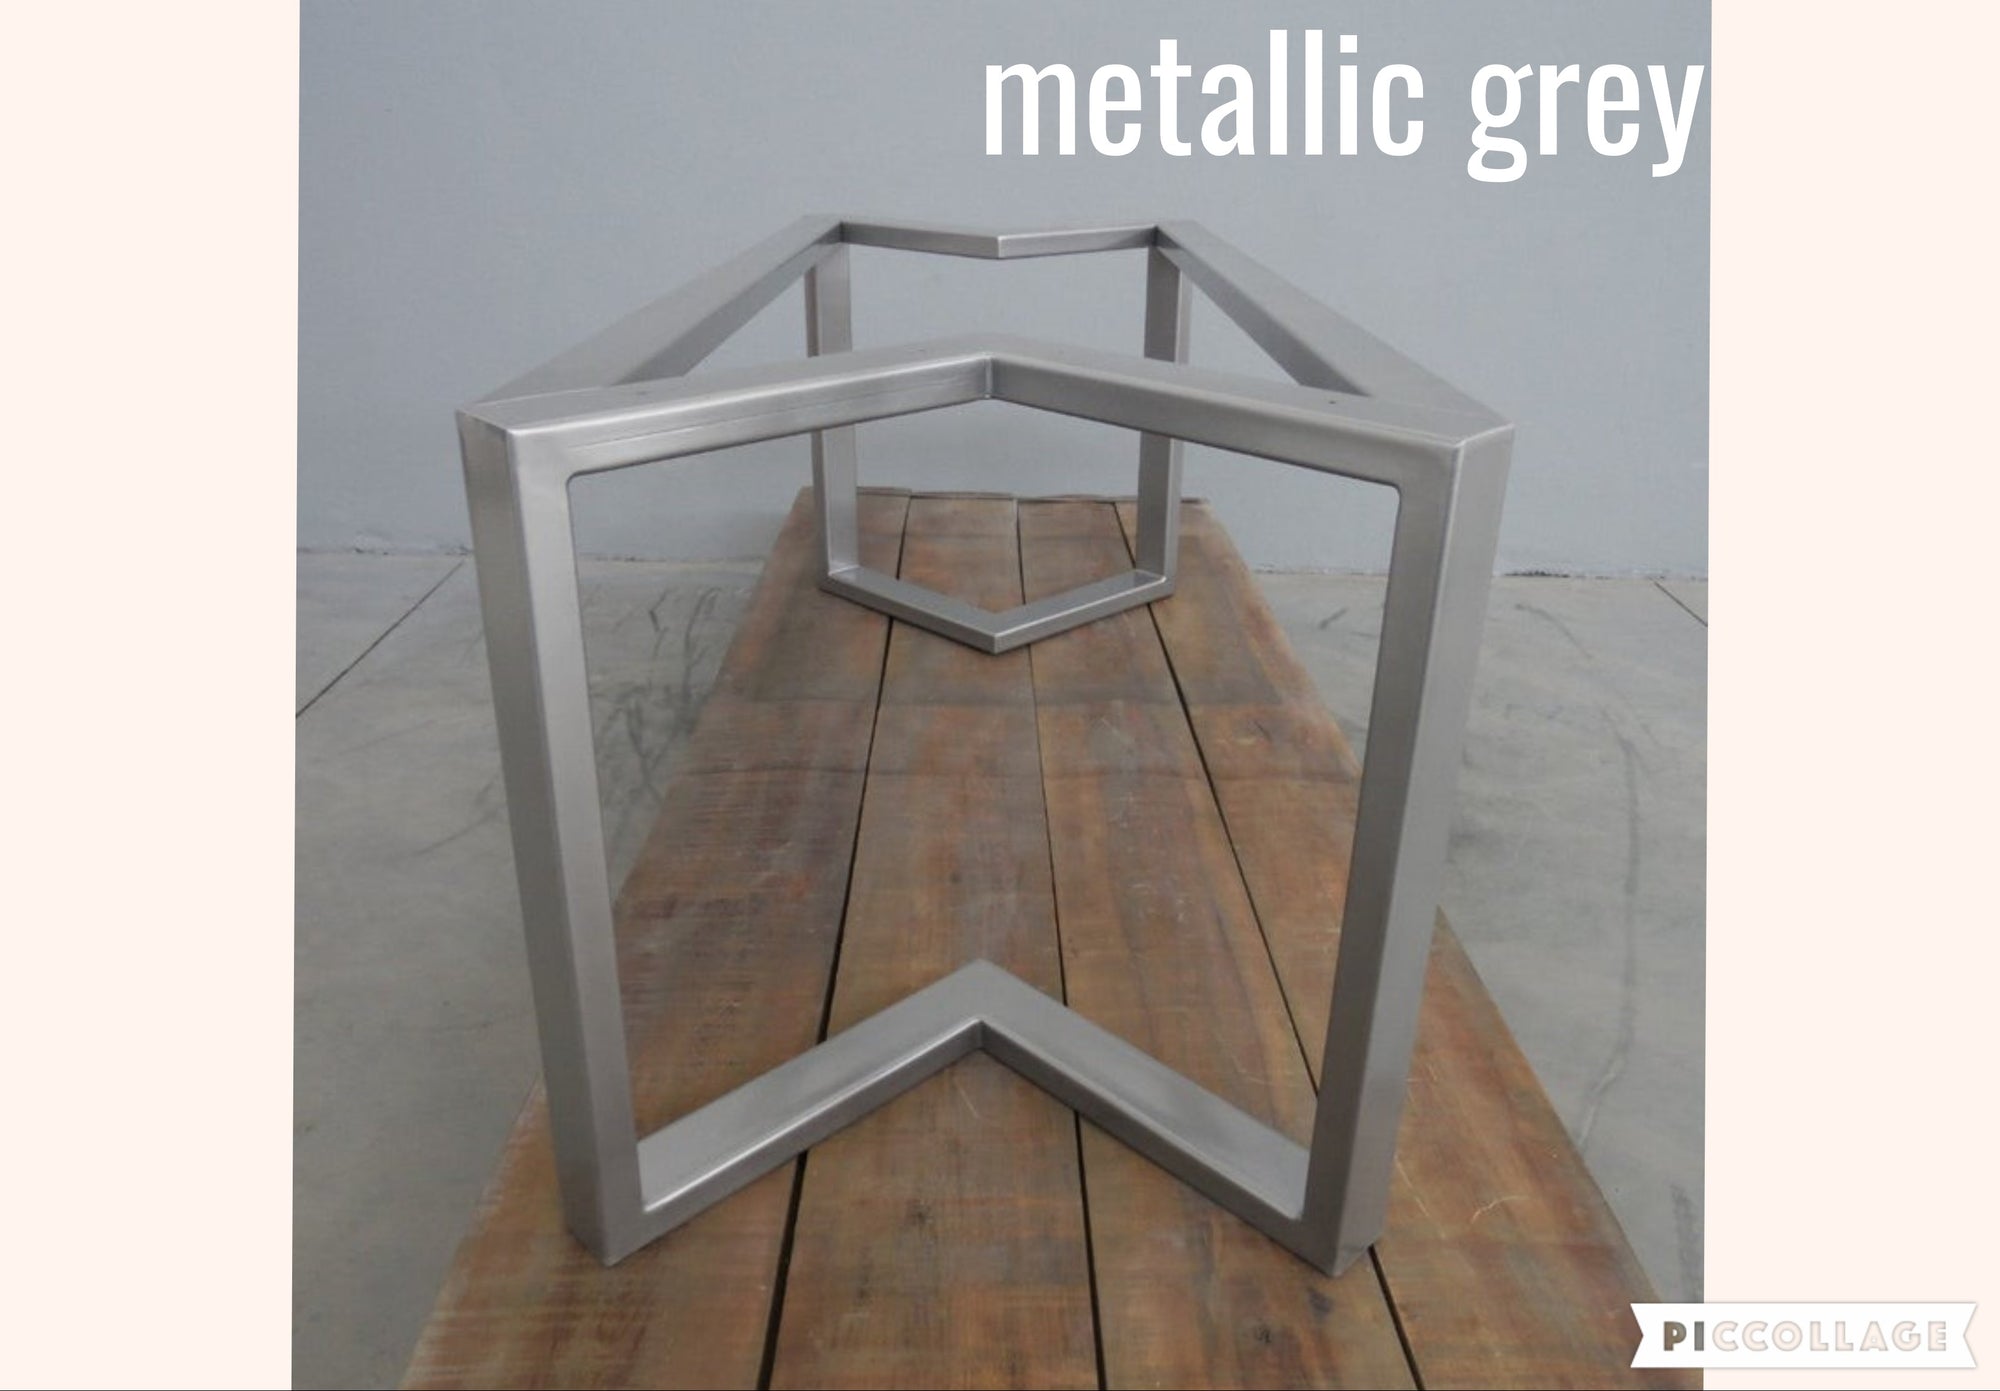 metallic grey table base metal